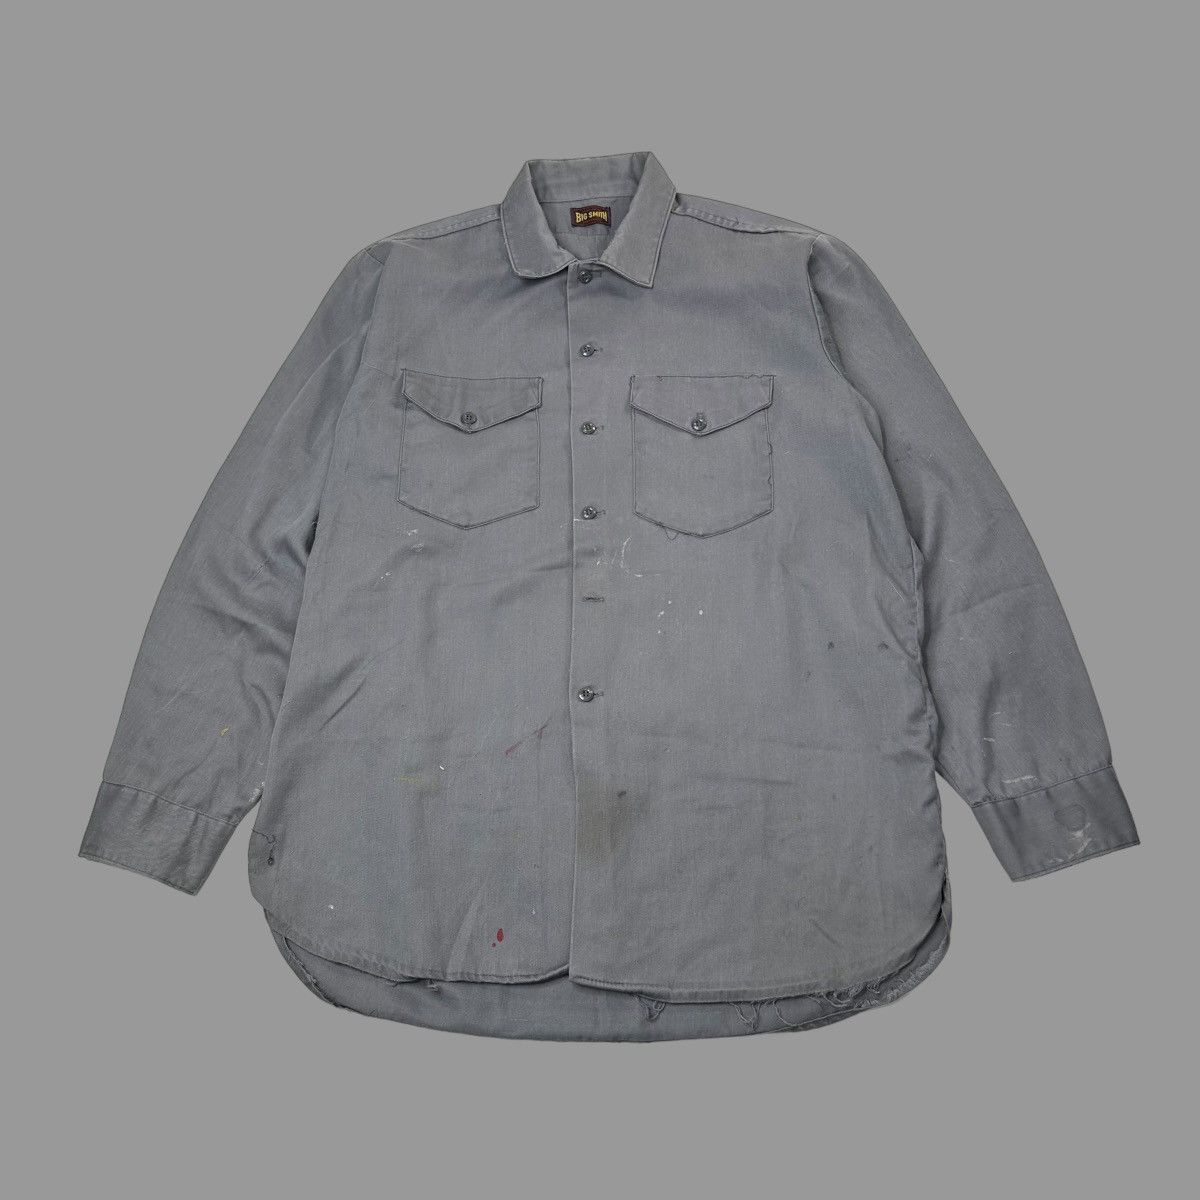 Vintage Vintage 1950s big smith mechanic work shirt Size US M / EU 48-50 / 2 - 1 Preview